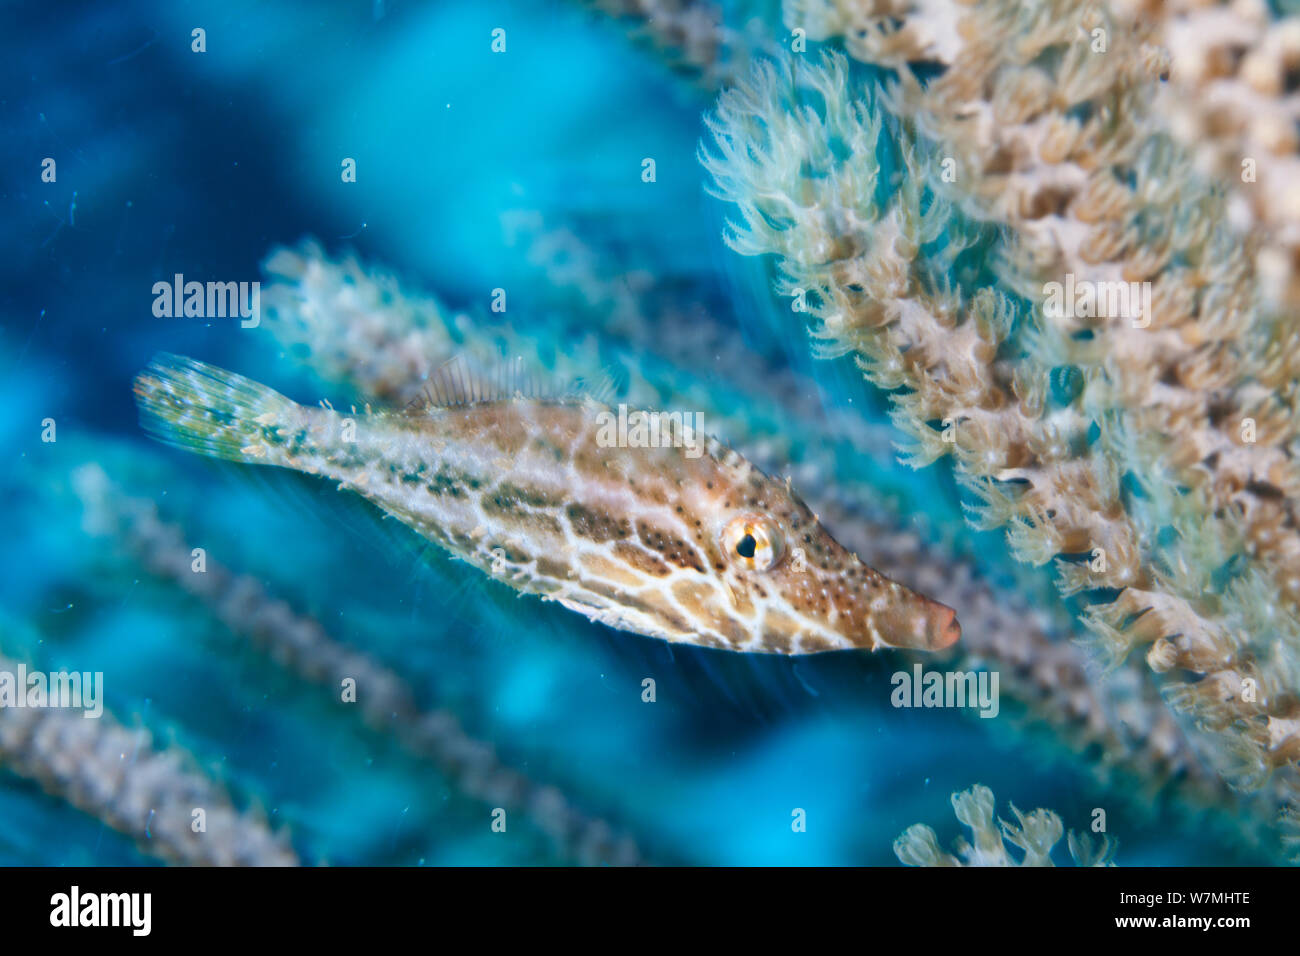 Slender Filefish (Monacanthus tuckeri) juvenile camouflaged among coral. Cancun National Park, Caribbean Sea, Mexico. Stock Photo